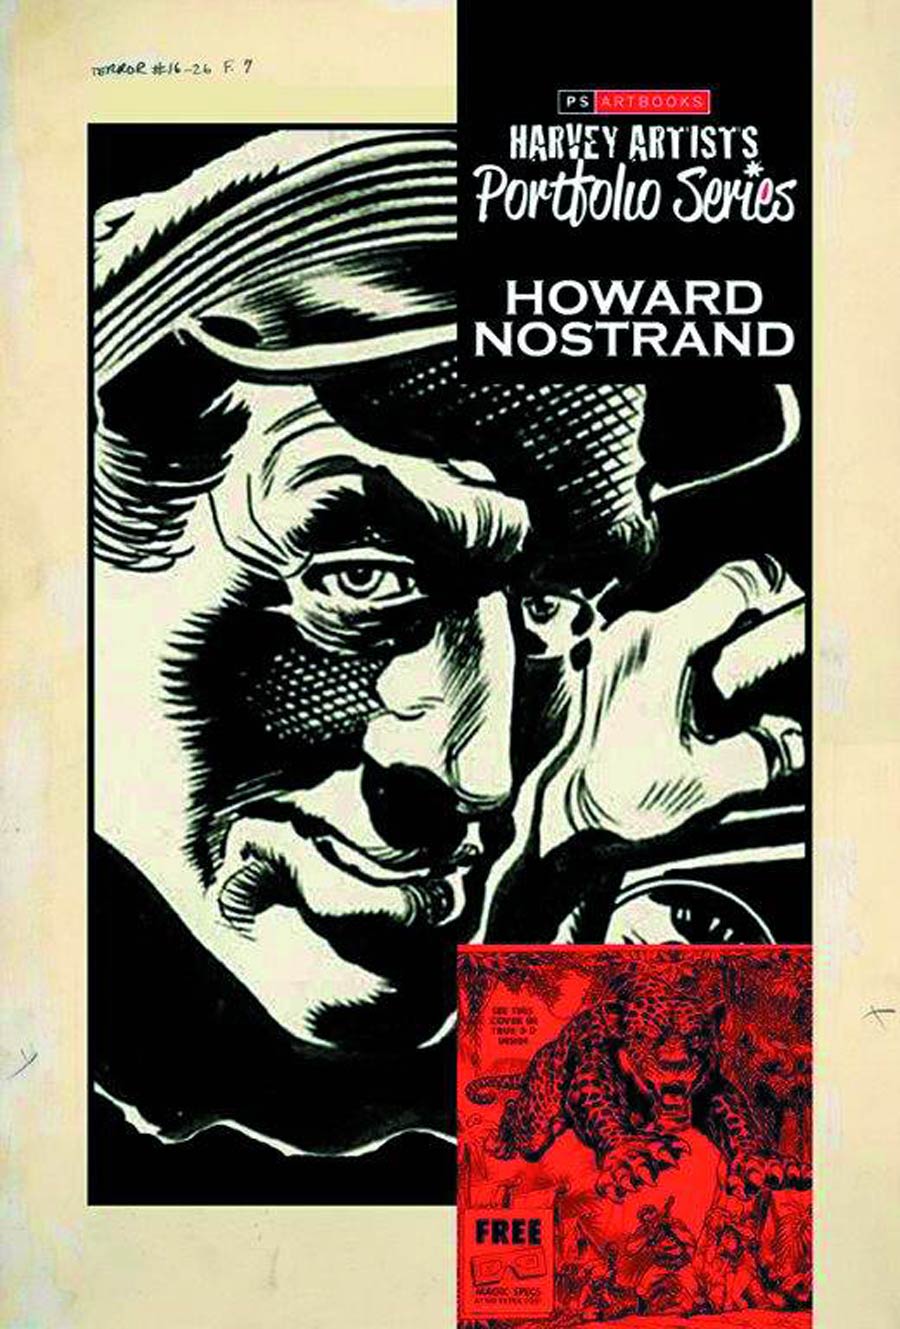 Harvey Artists Portfolio Series Vol 0 Howard Nostrand HC